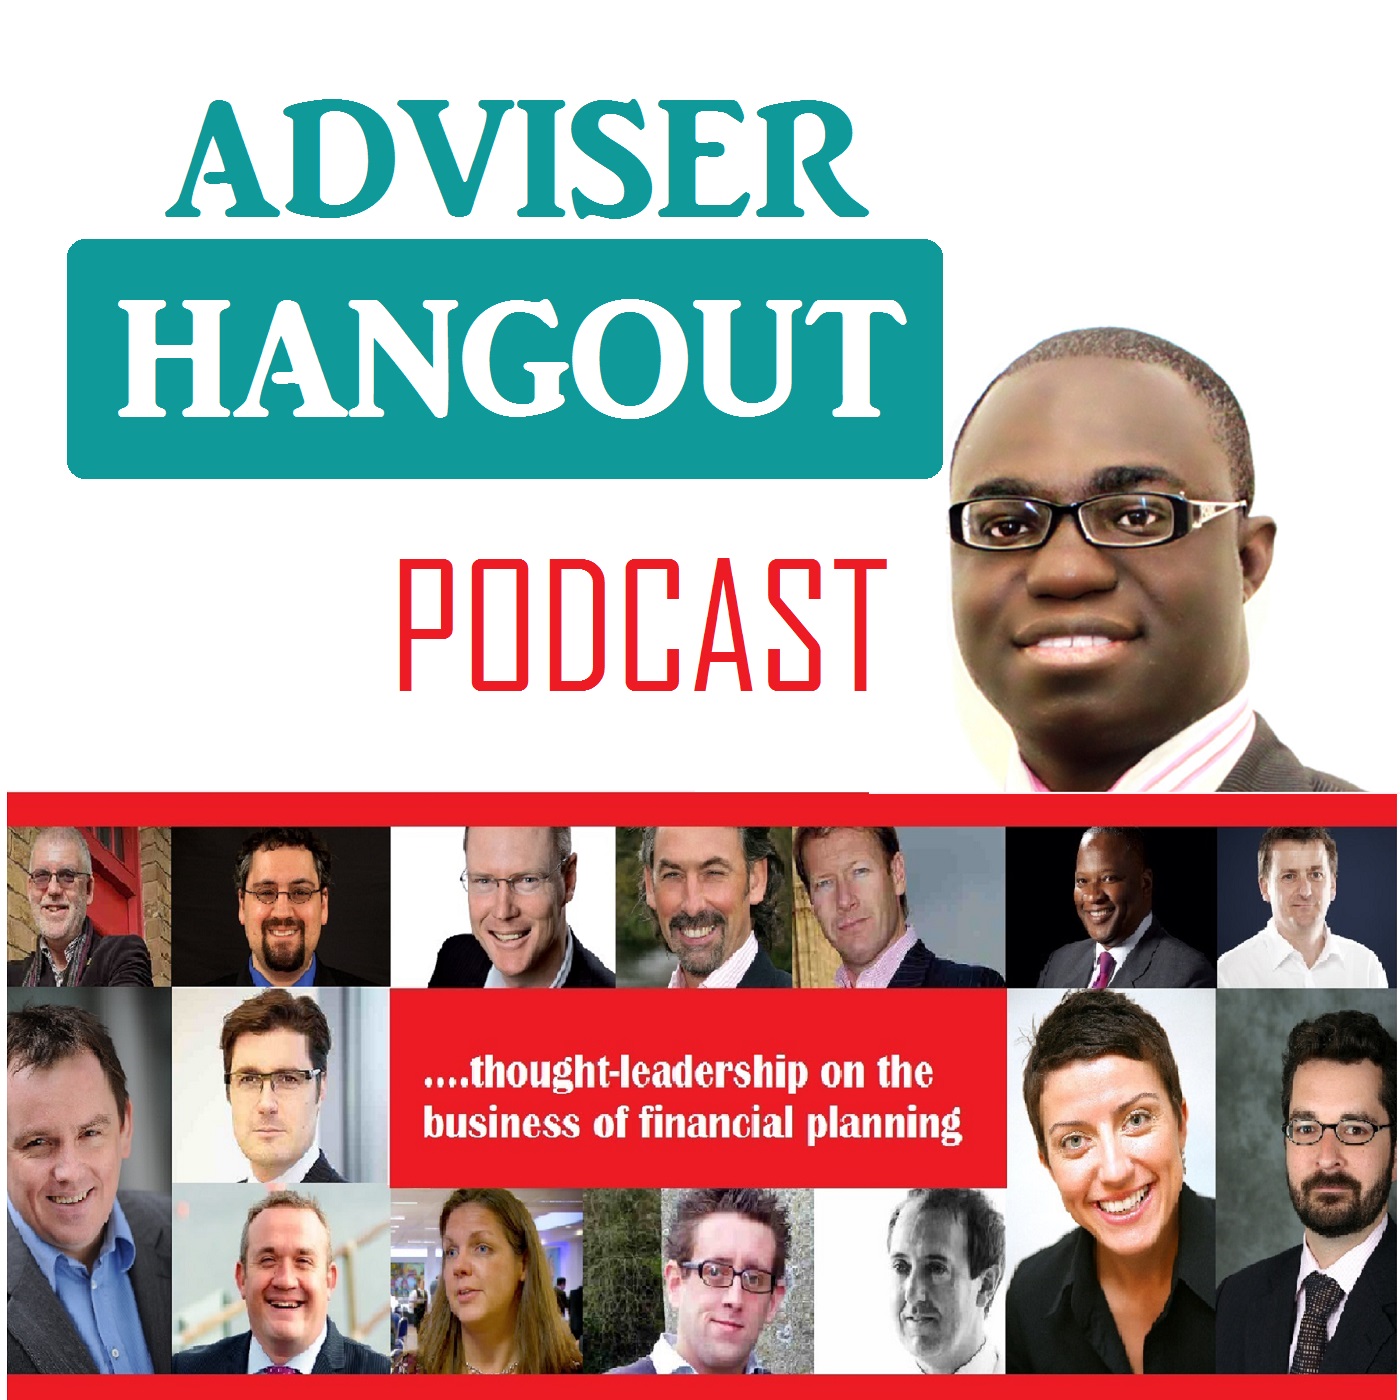 Adviser Hangout Podcast